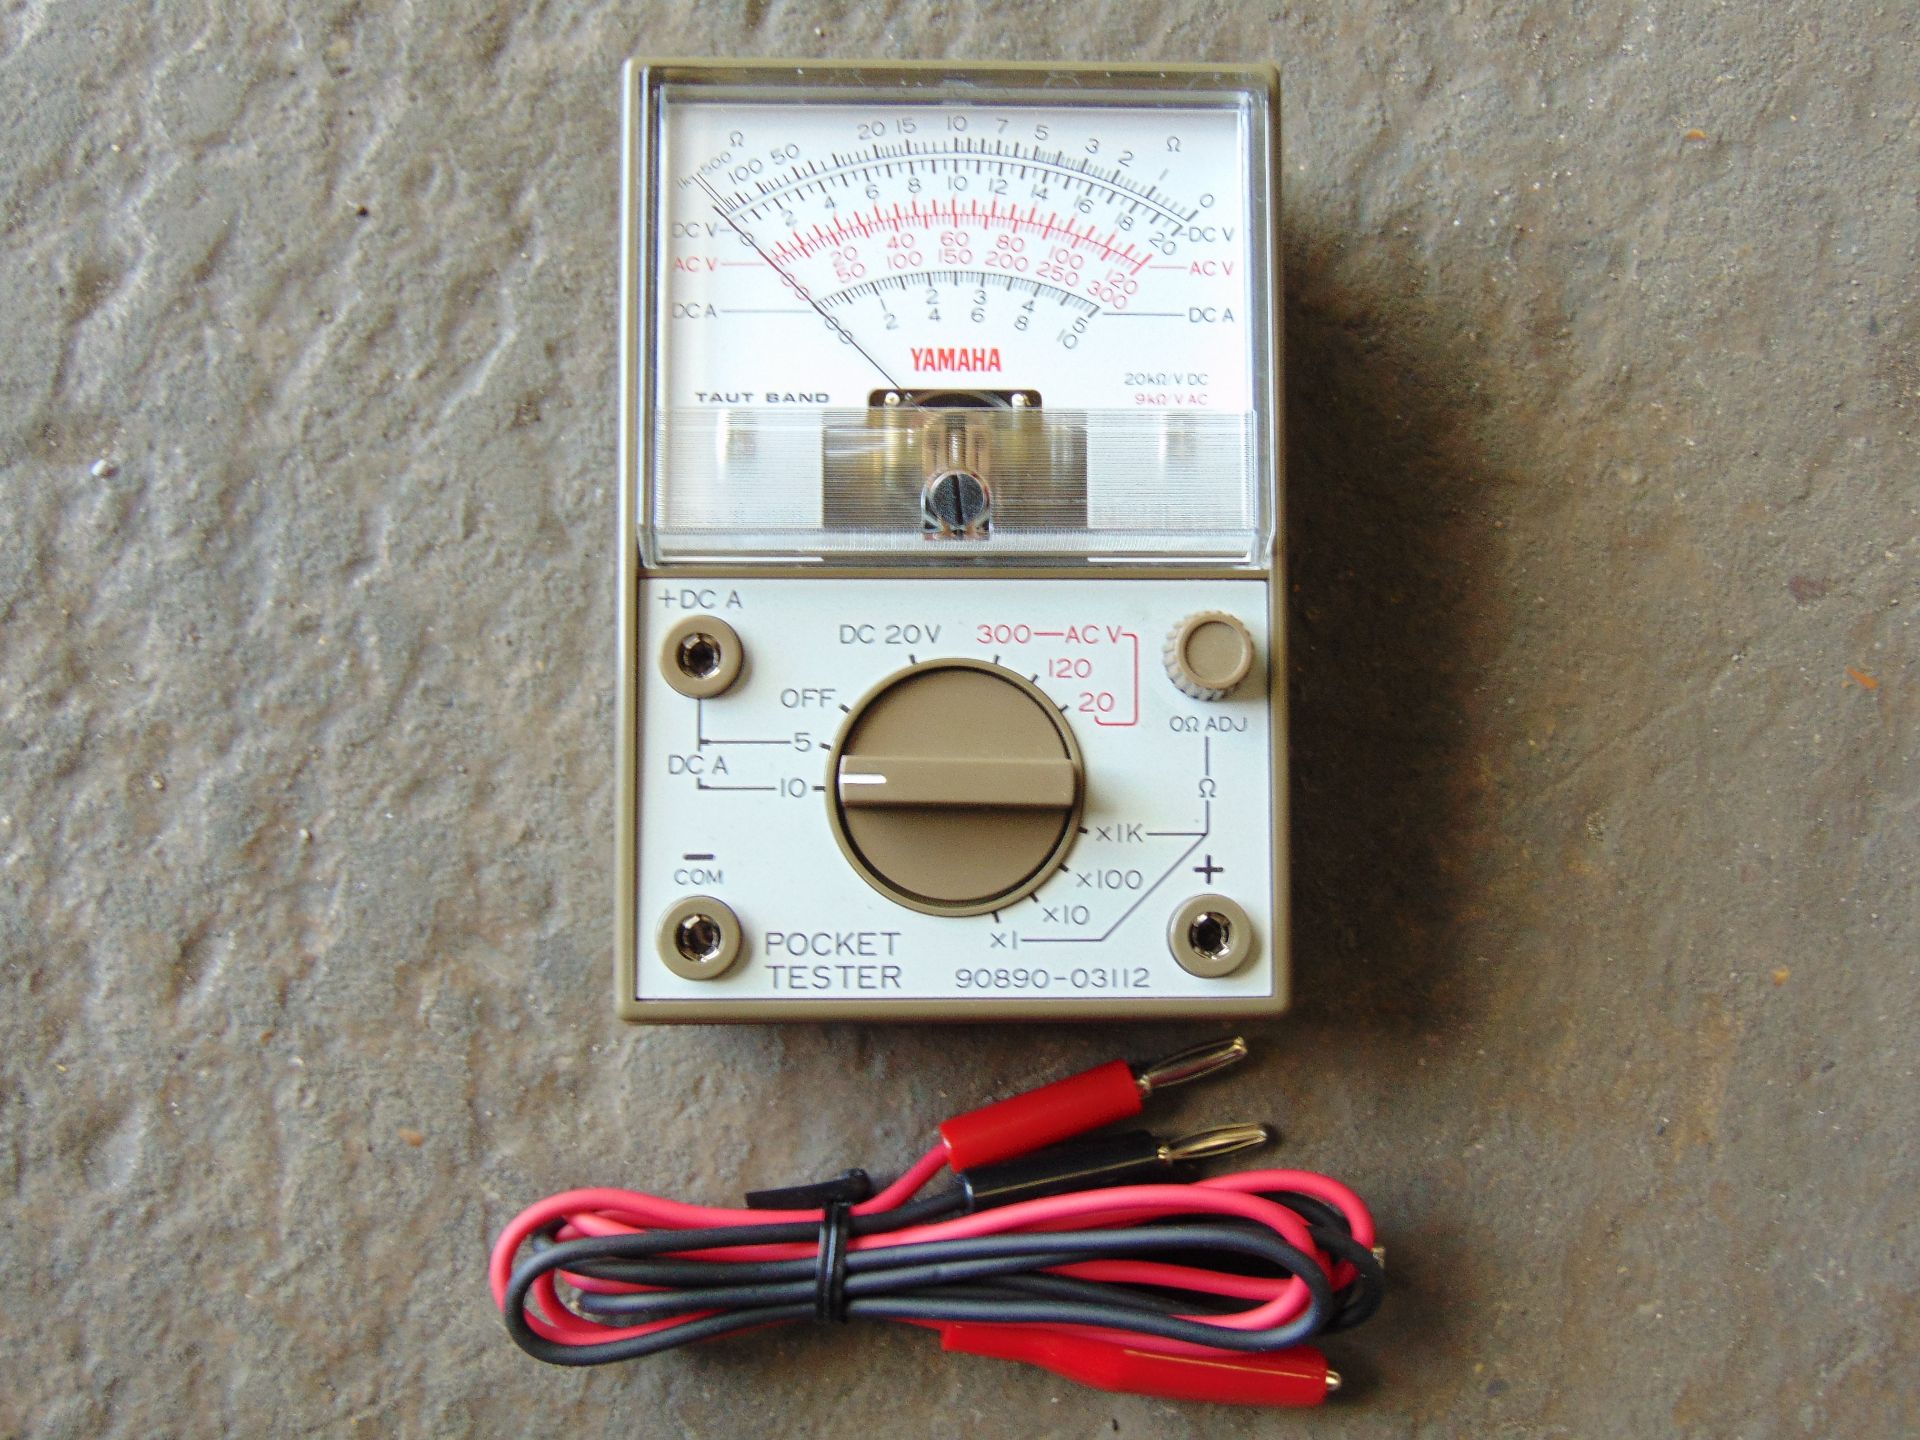 15 x Yamaha Pocket Testers/Mulitimeters P/no 90890-03112 - Image 2 of 6